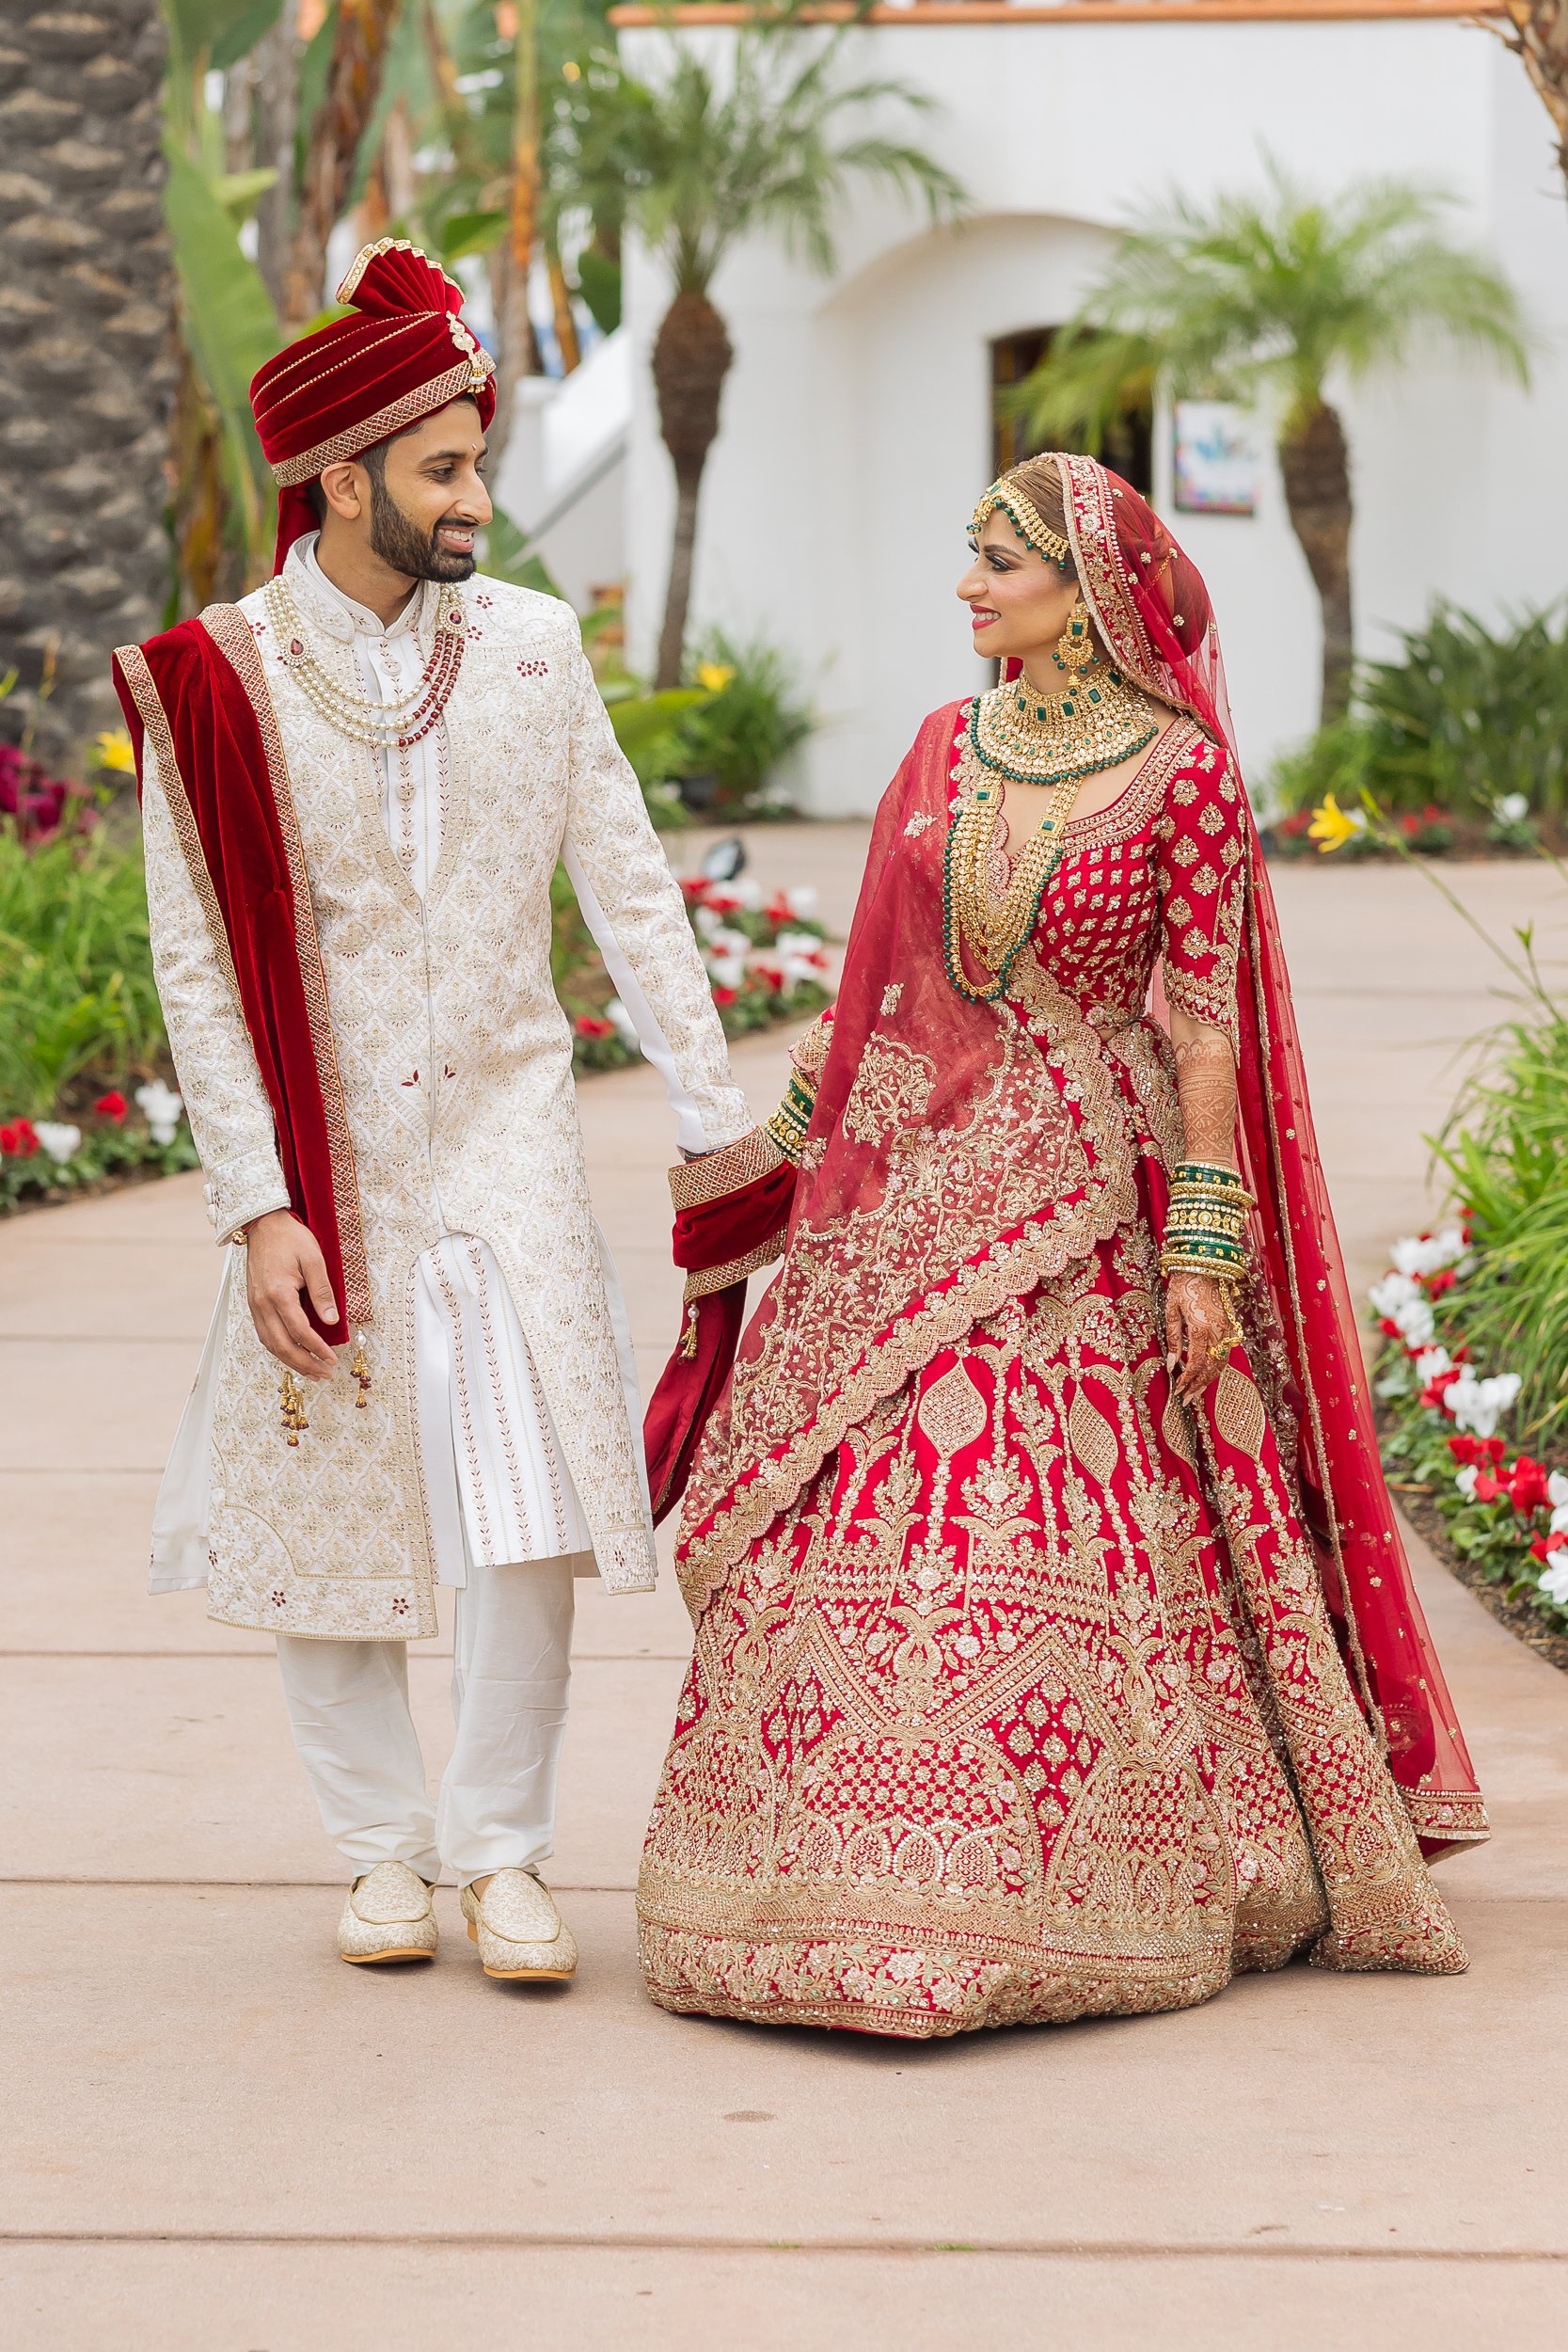 Omni La Costa Resort Indian Wedding-18.jpg